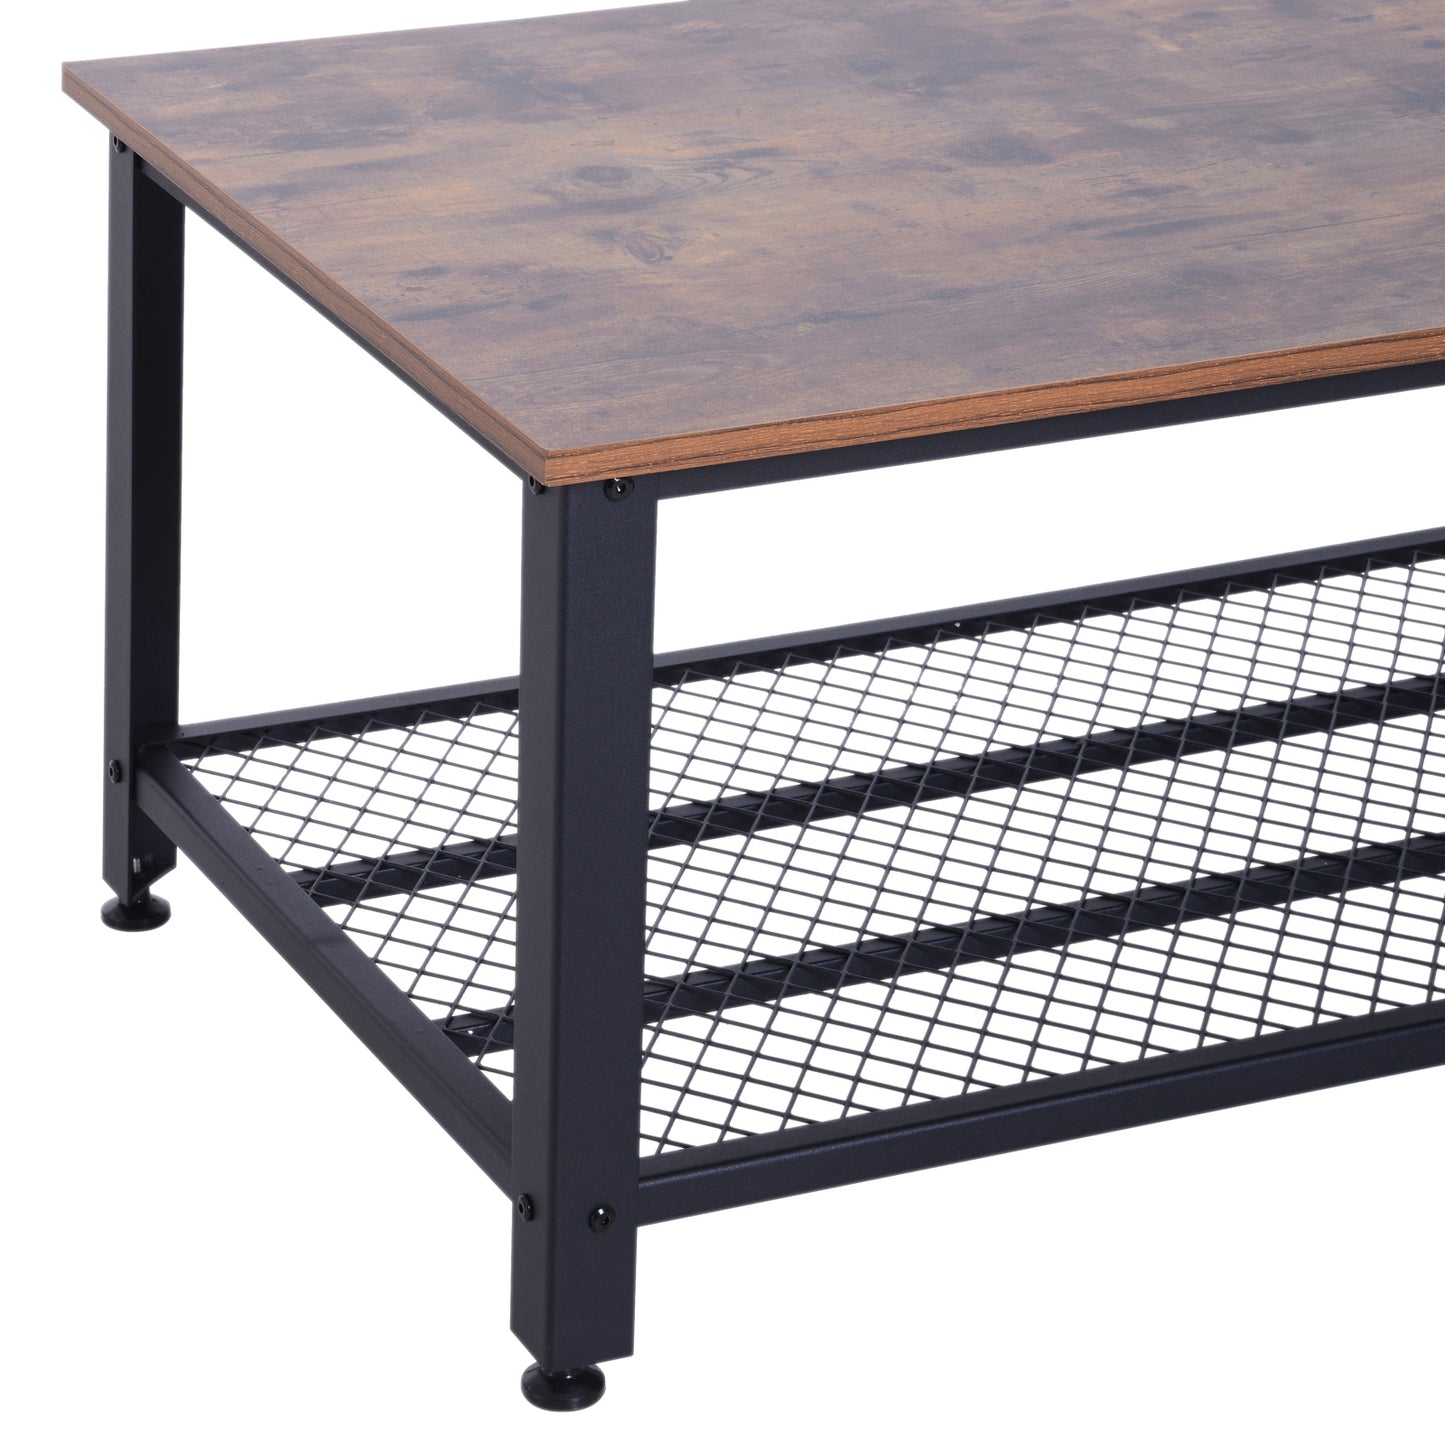 HOMCOM 2-Tier Coffee Table, 106Lx60Wx45H cm-Wood Grain/ Black Frame Colour